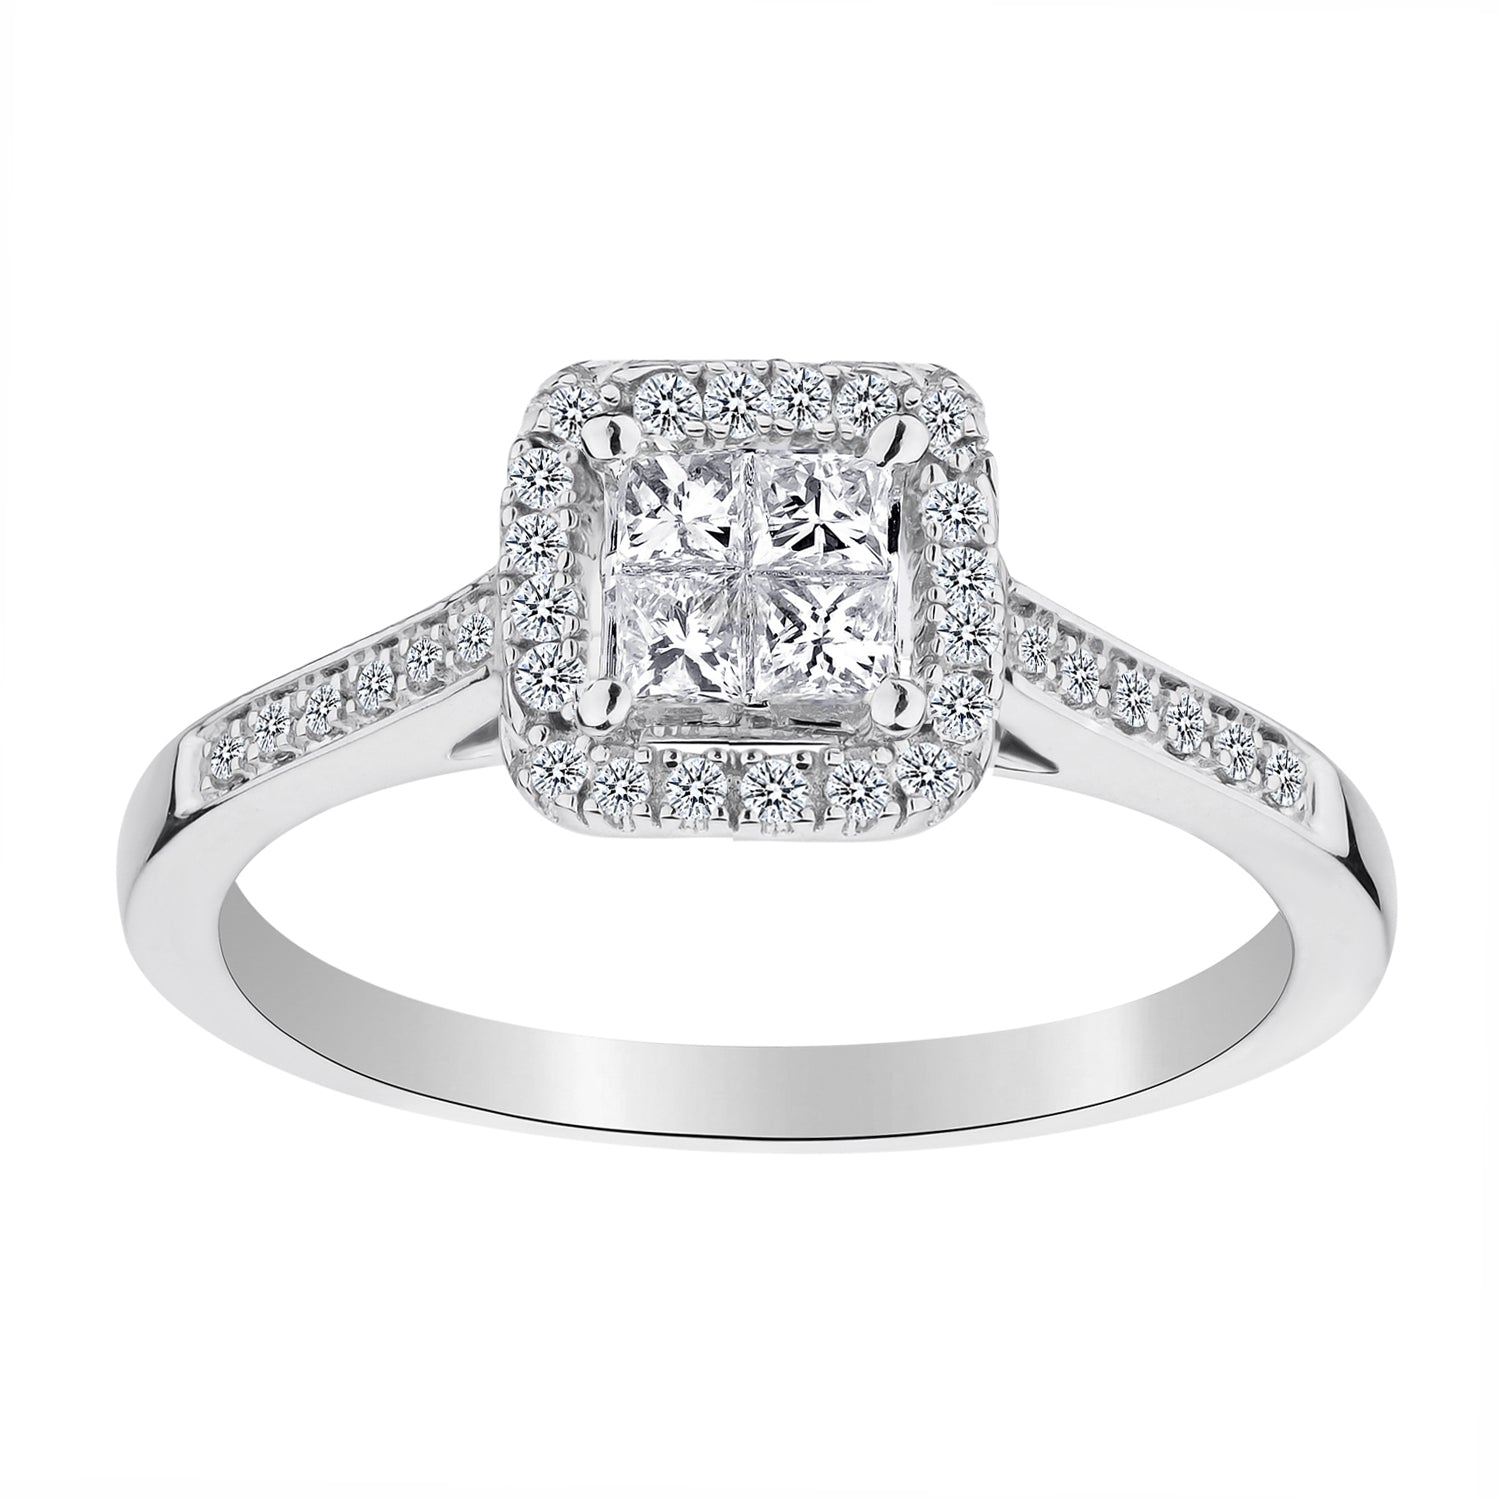 .33 Carat Diamond Ring, 10kt White Gold - Griffin Jewellery Designs